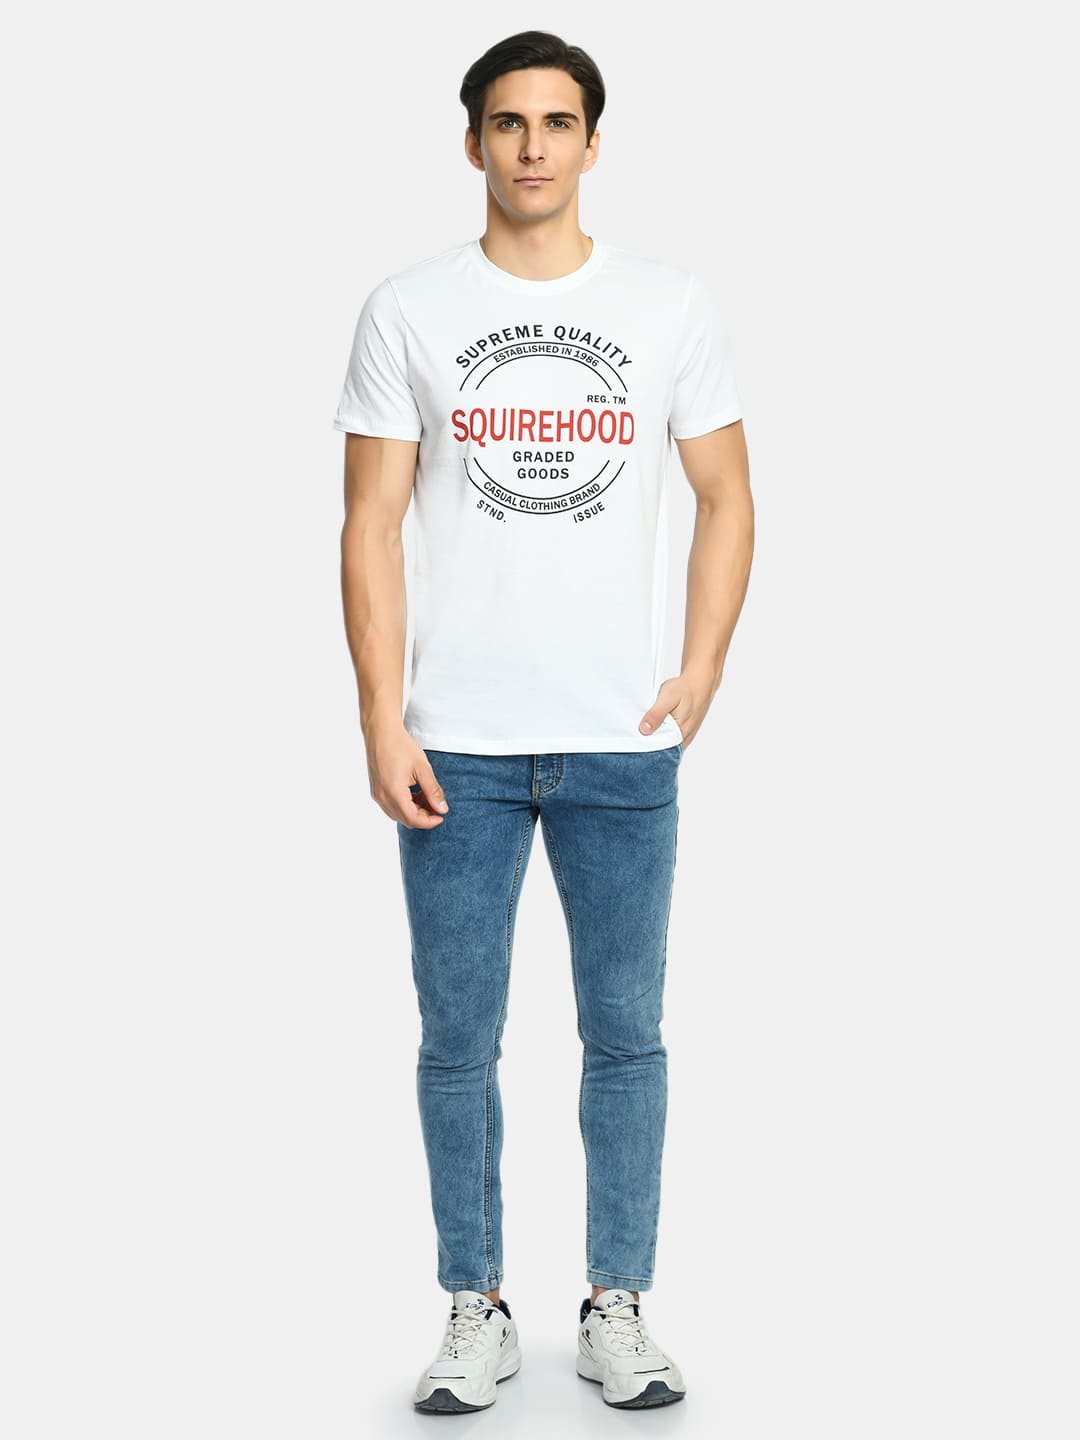 Men's Supreme Quality Printed T-Shirt